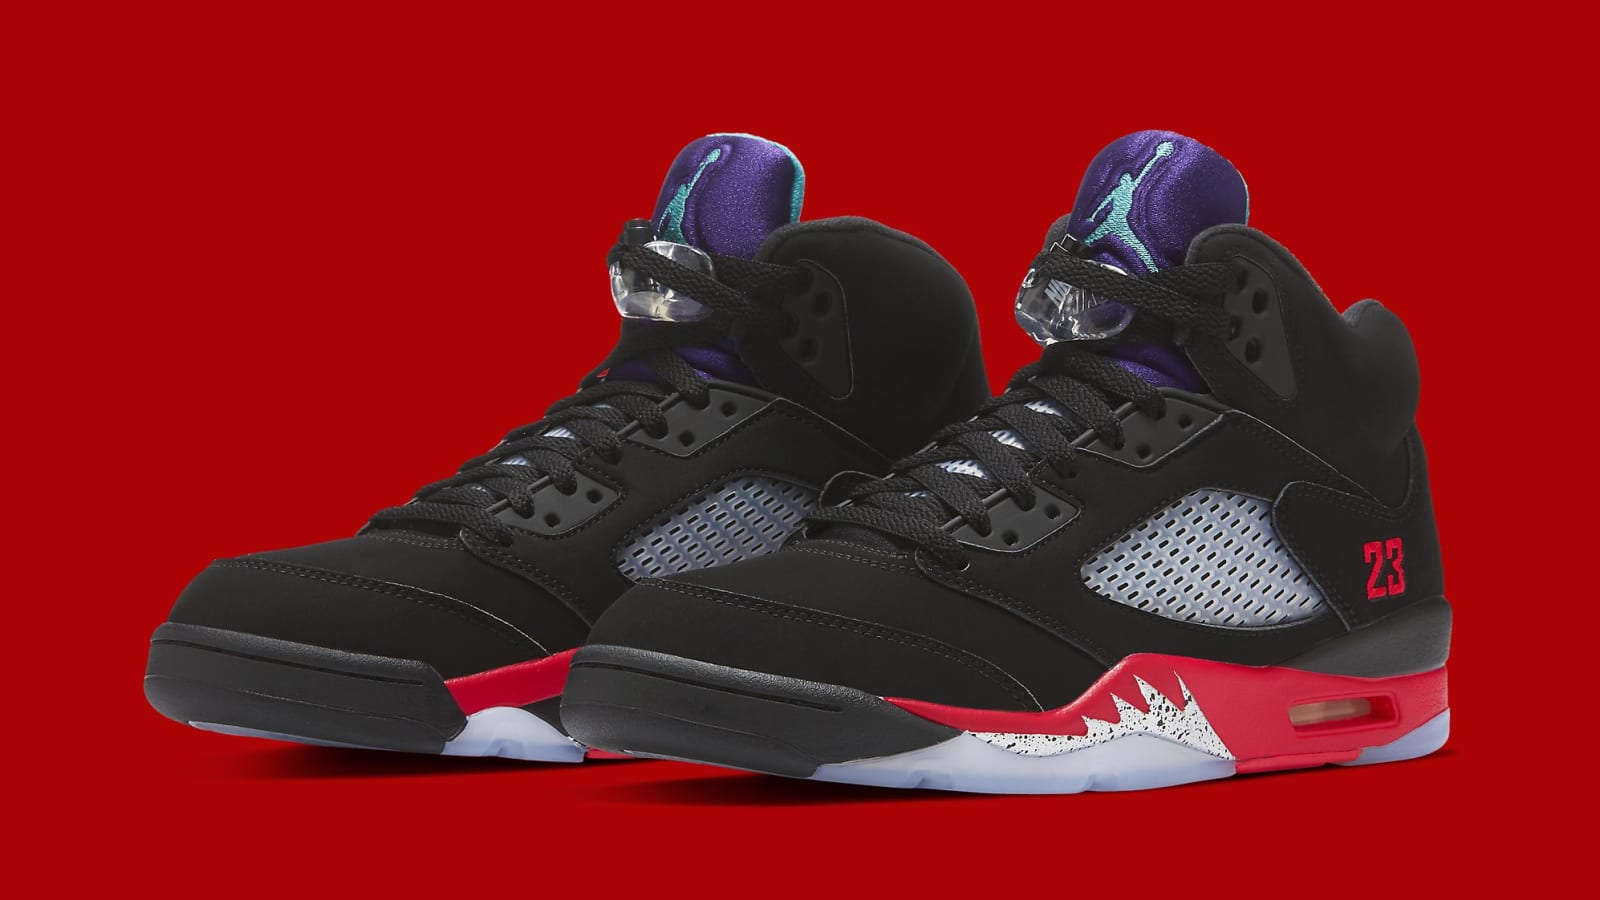 Numerous Air Jordan Releases Delayed: Details